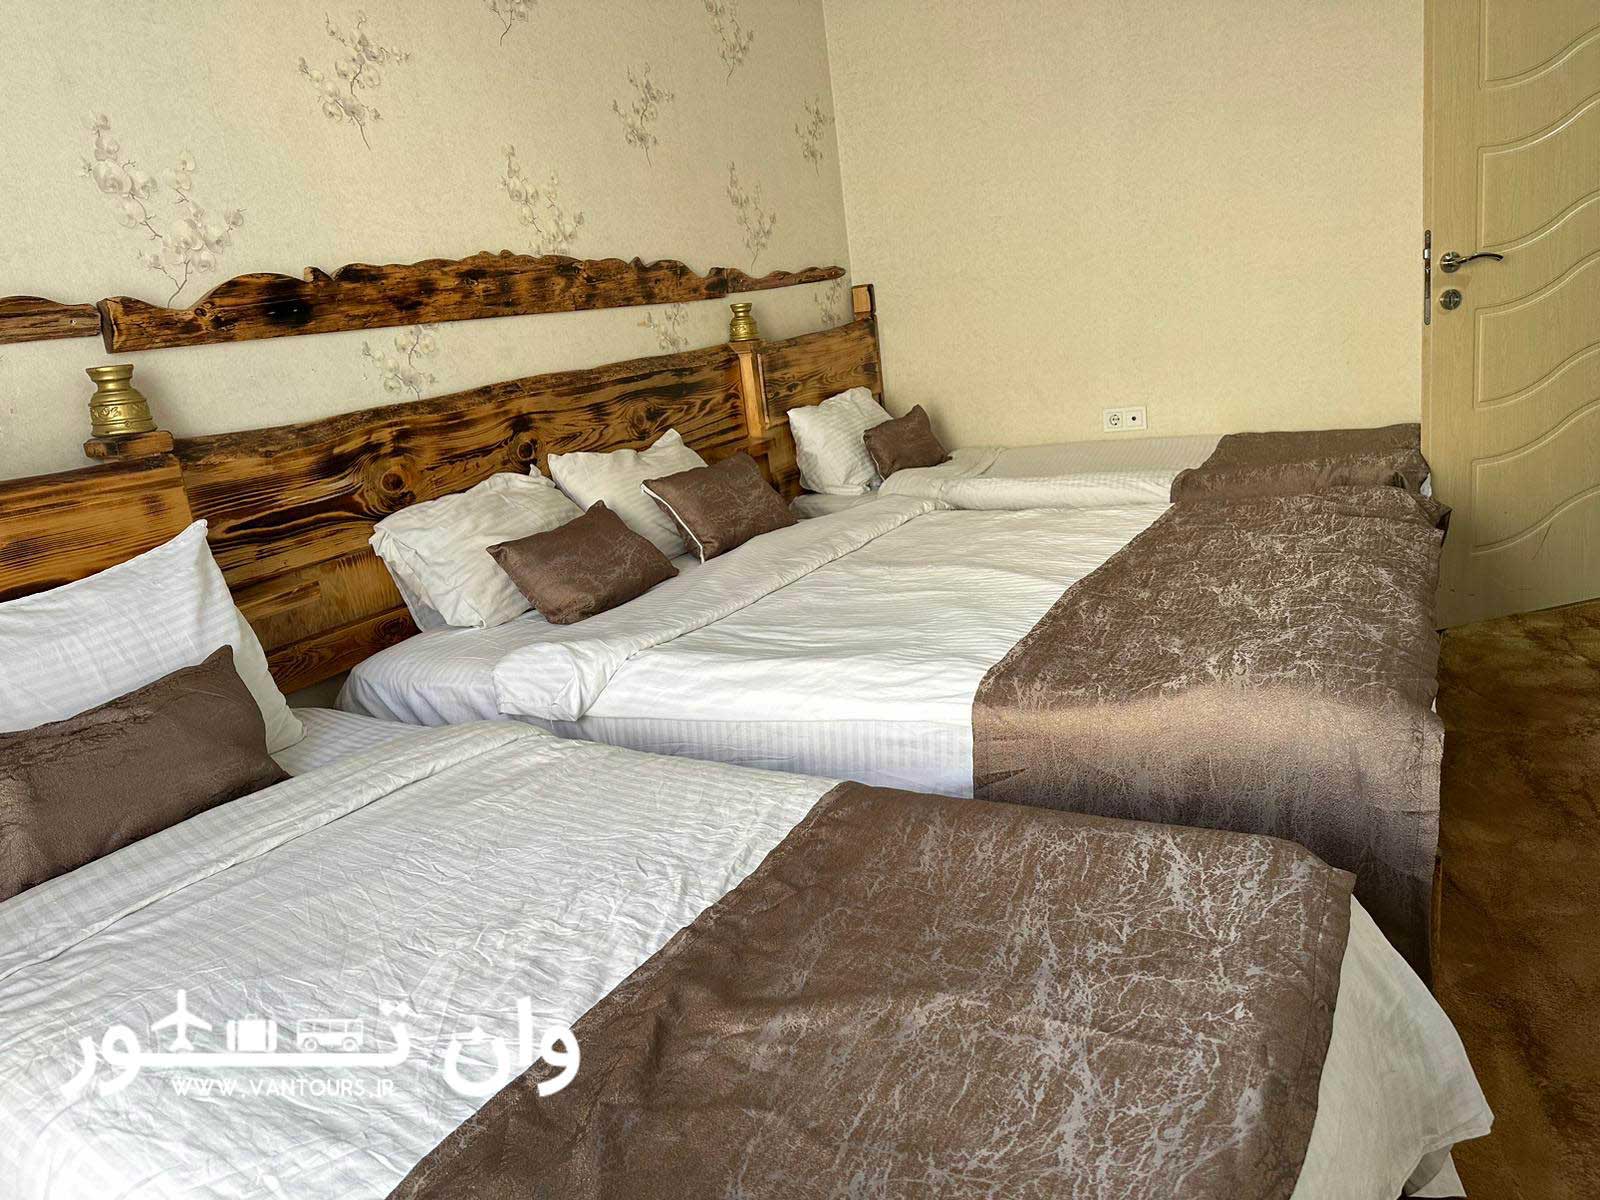 هتل رئال سوئیت در وان ترکیه – real suit hotel